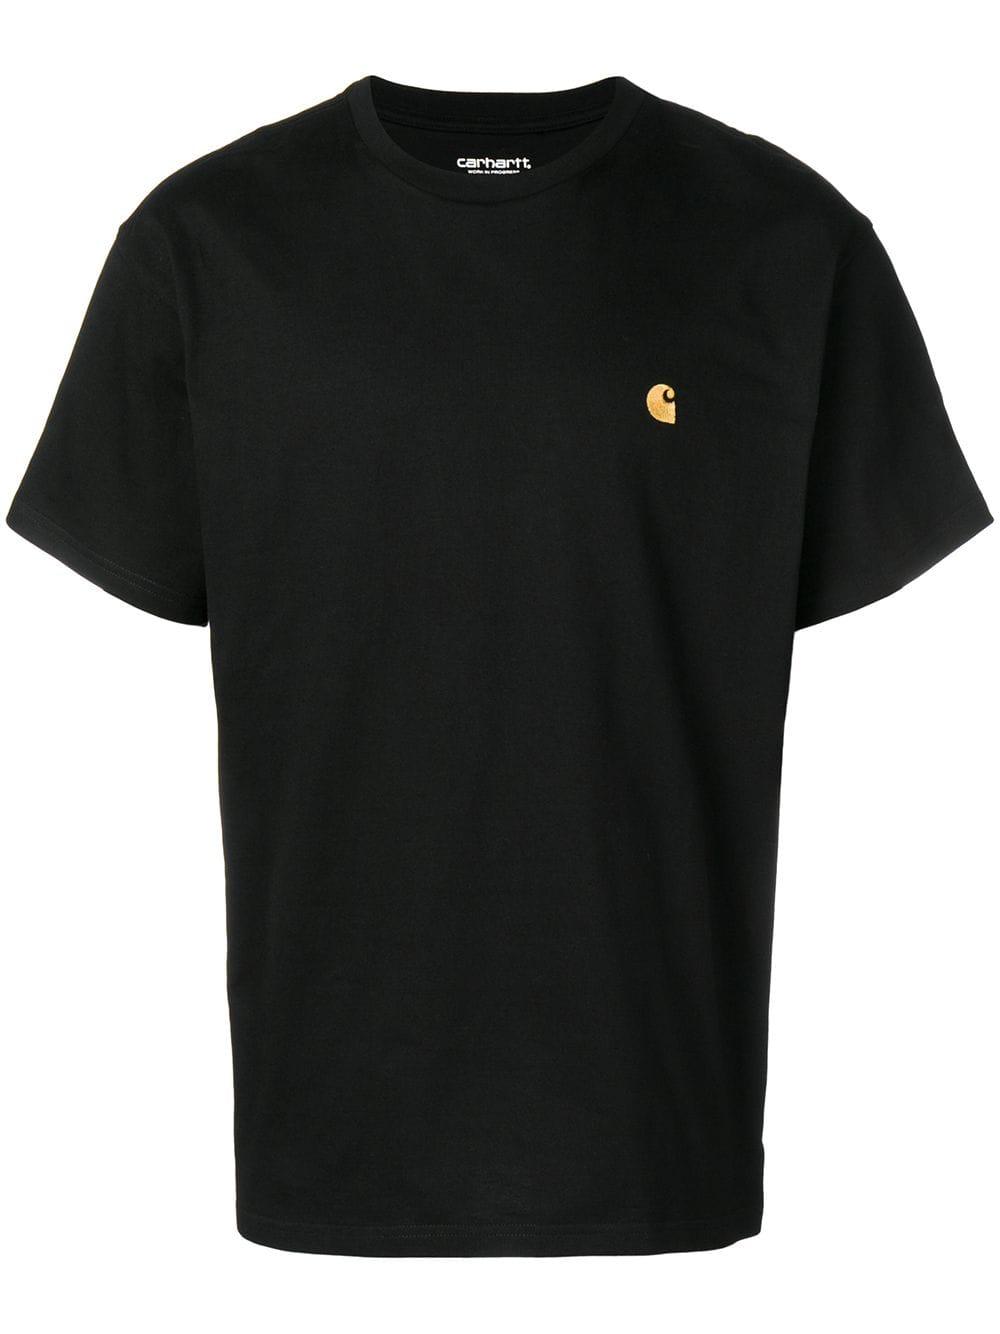 Carhartt WIP Cotton Logo T-shirt in Black for Men - Lyst